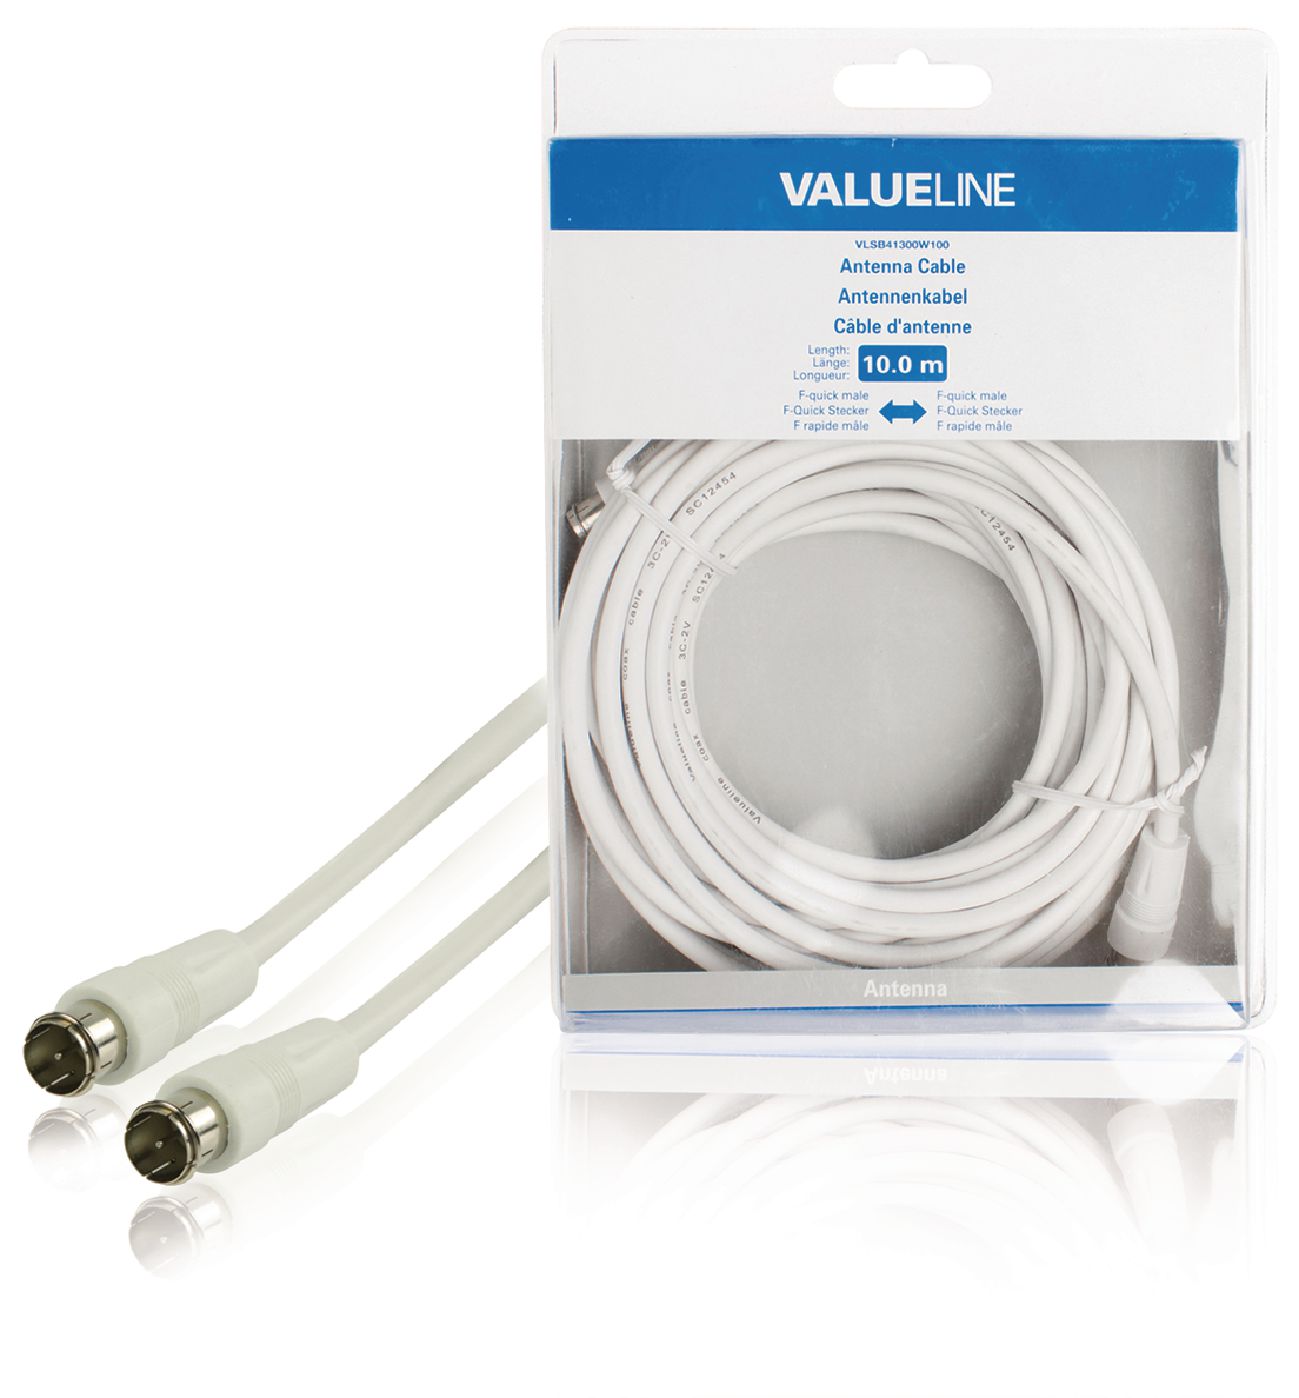 VALUELINE VLSB41300W100 Anténní kabel F samec - F samec quick